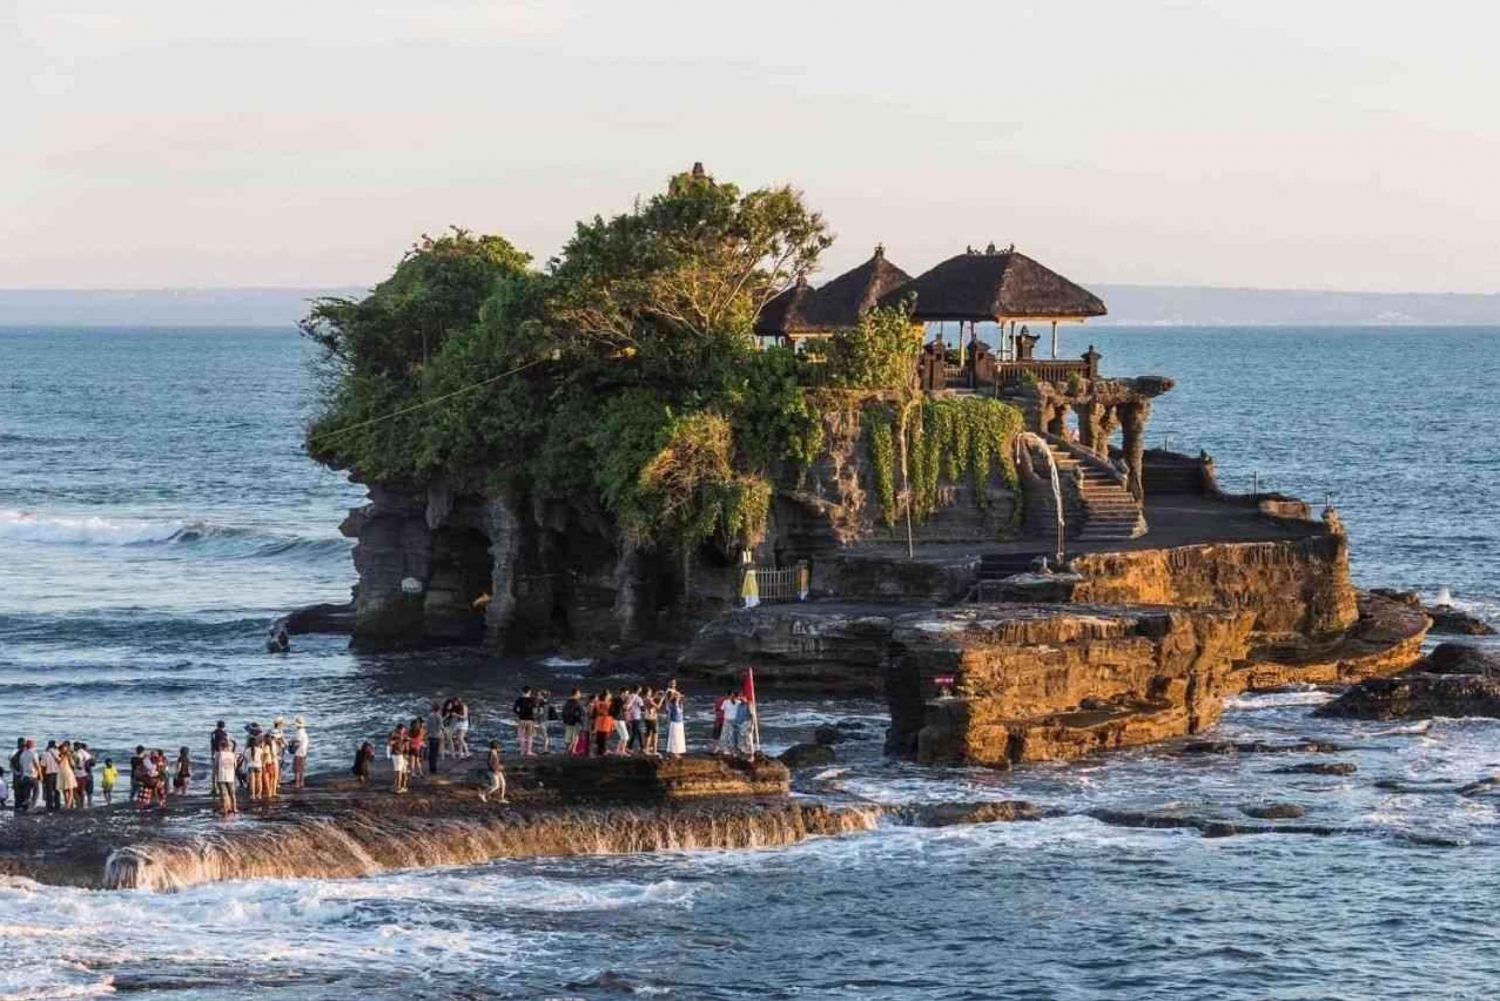 Bali's Bedugul Bliss: Lake Beratan, Tanah Lot, and Jatiluwih